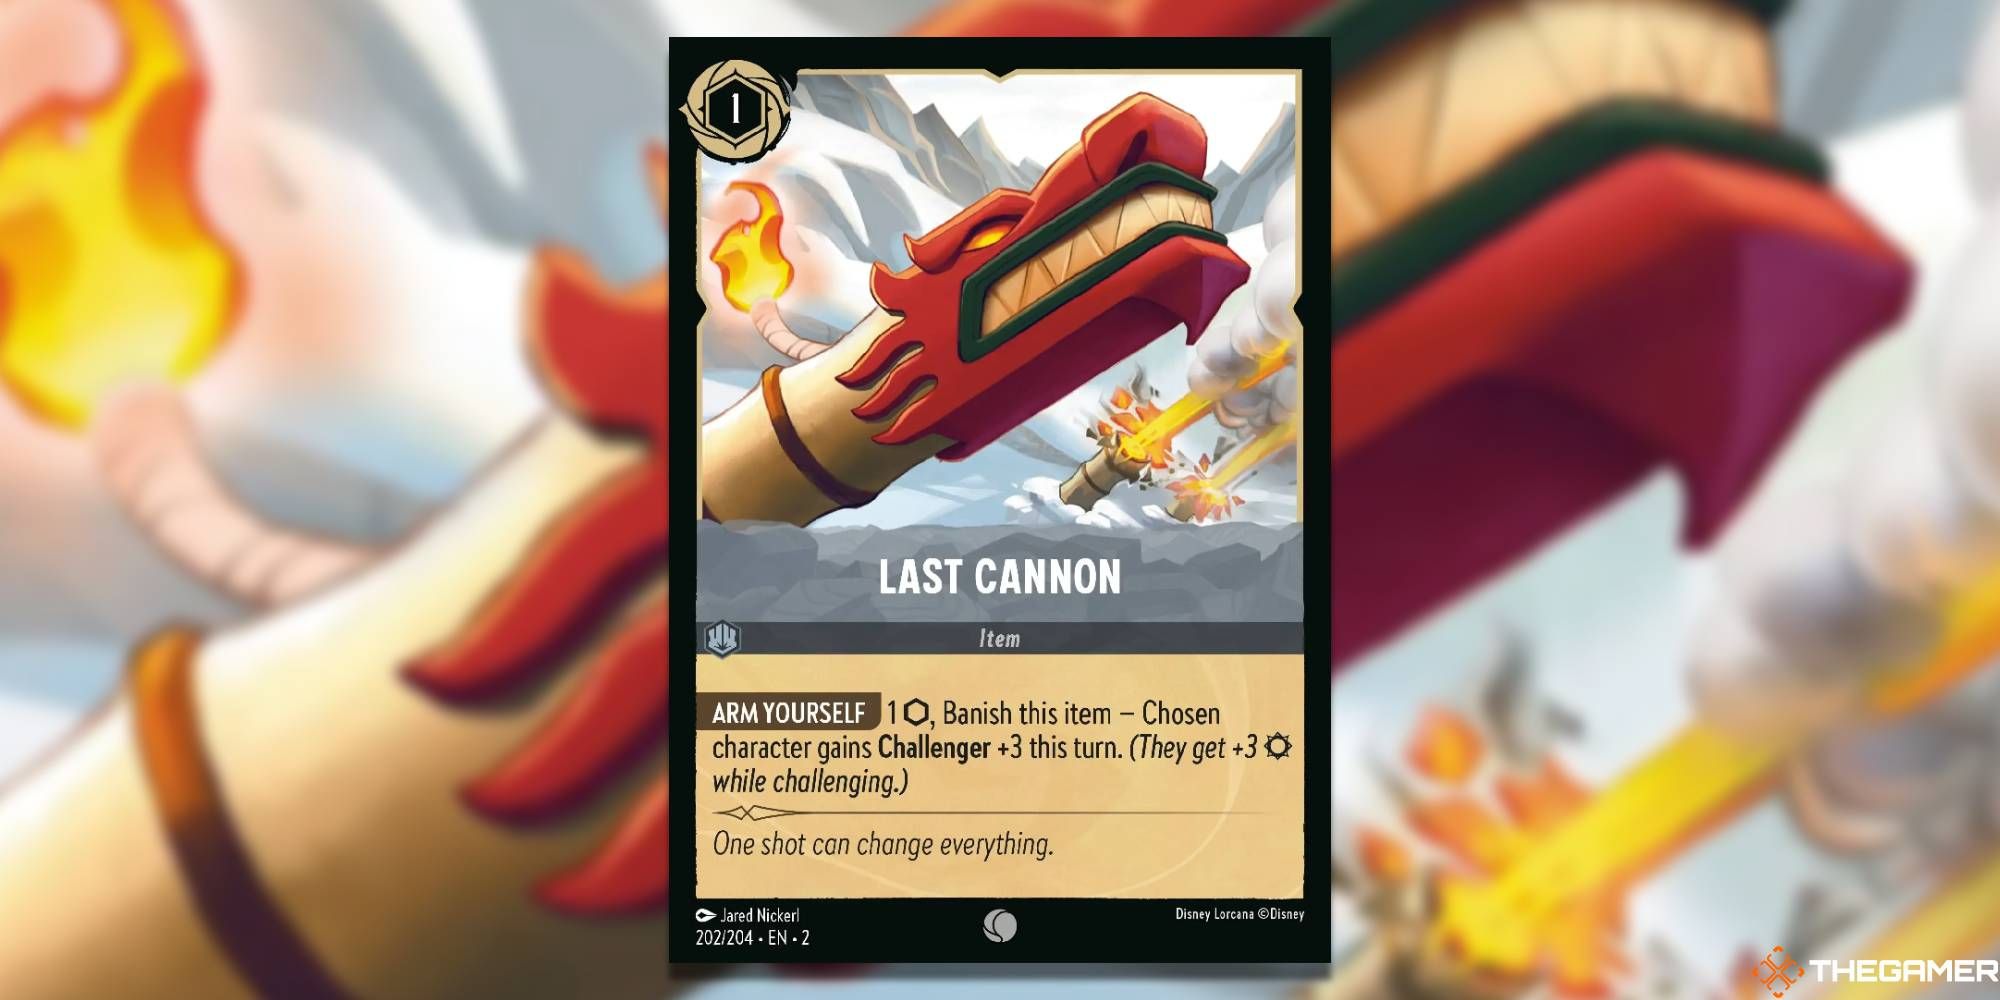 Last Cannon by Jared Nickeri